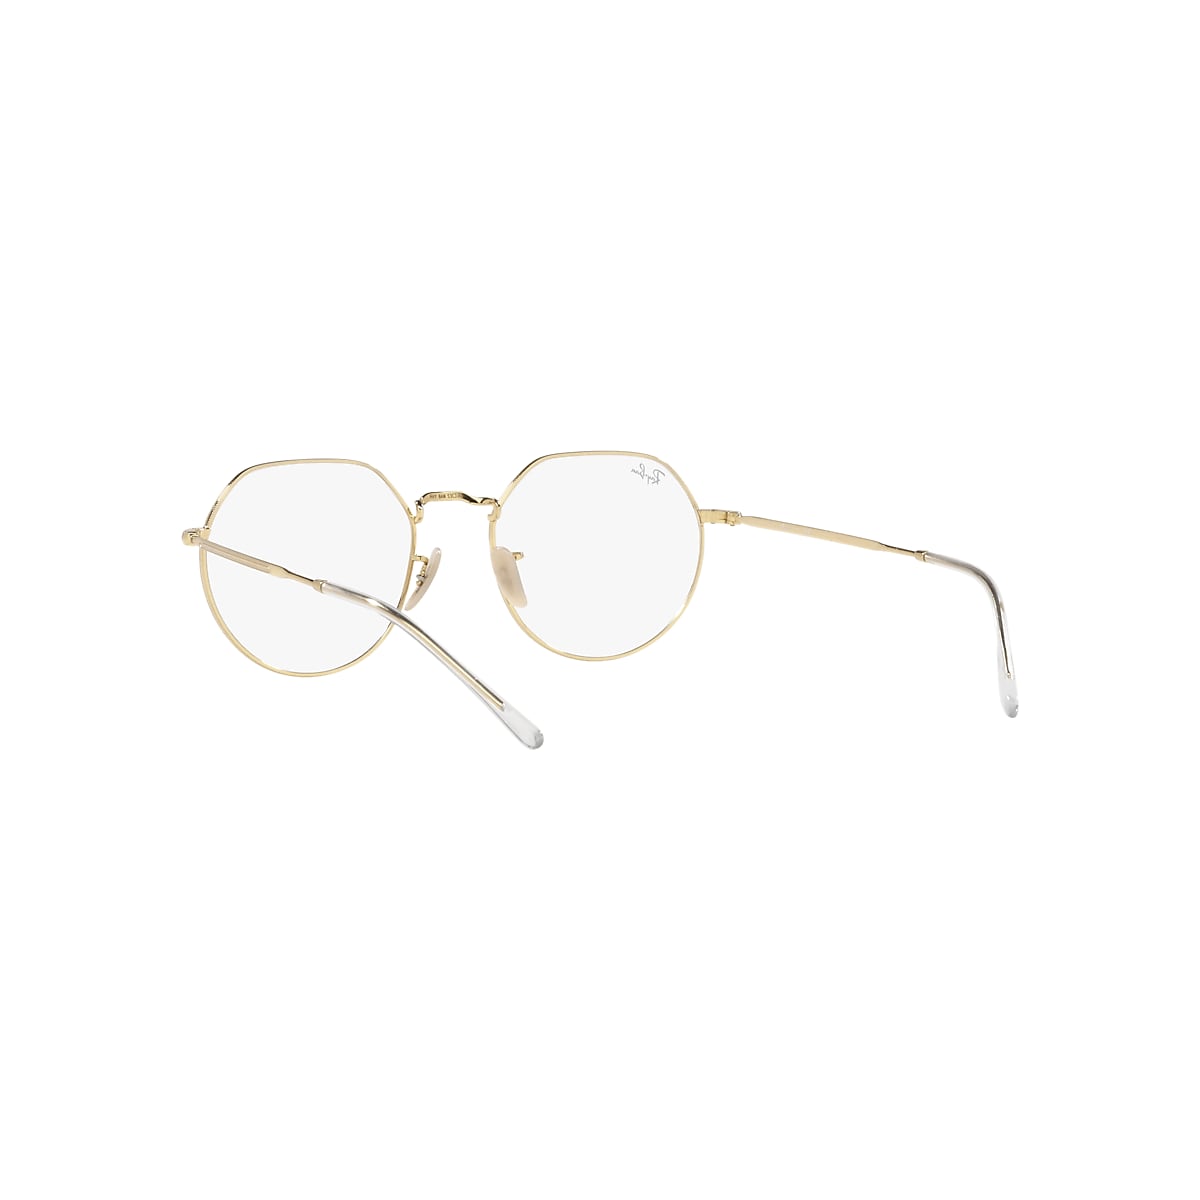 JACK OPTICS Eyeglasses with Petroleum Frame - RB6465F | Ray-Ban® US